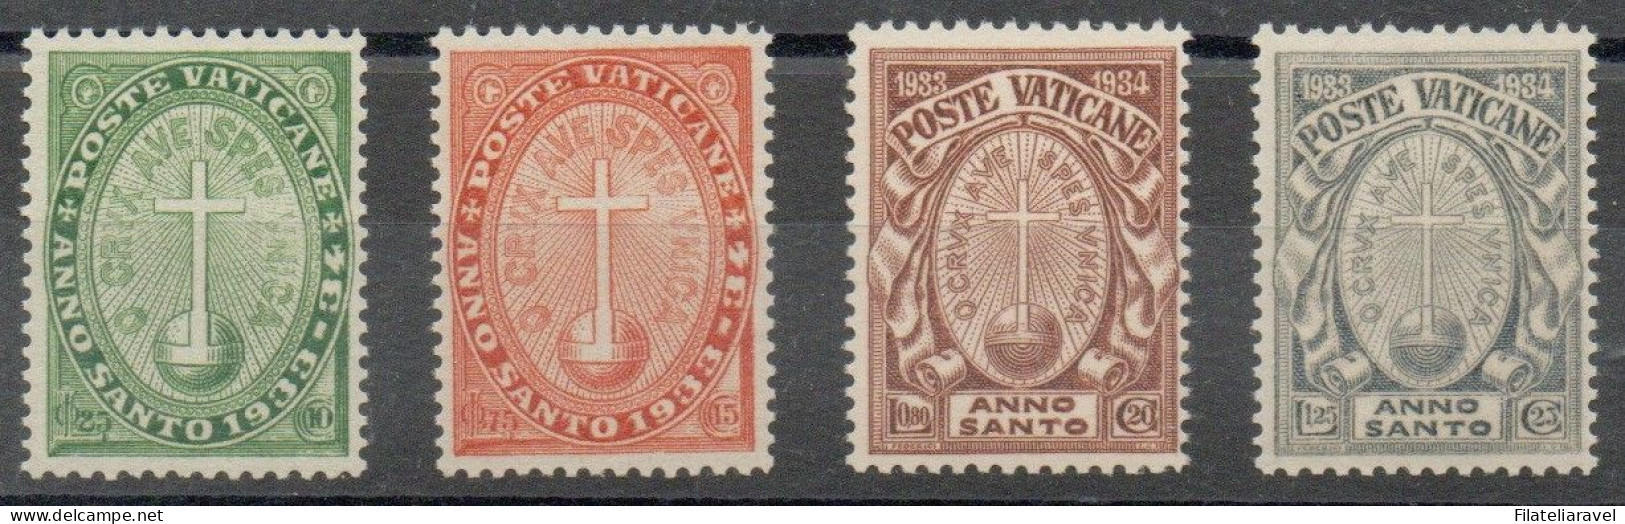 Vaticano - 1933 - "Anno Santo Straordinario", Serie Completa, 4 Valori, Gomma Integra, Catalogo 15/18 - Ongebruikt